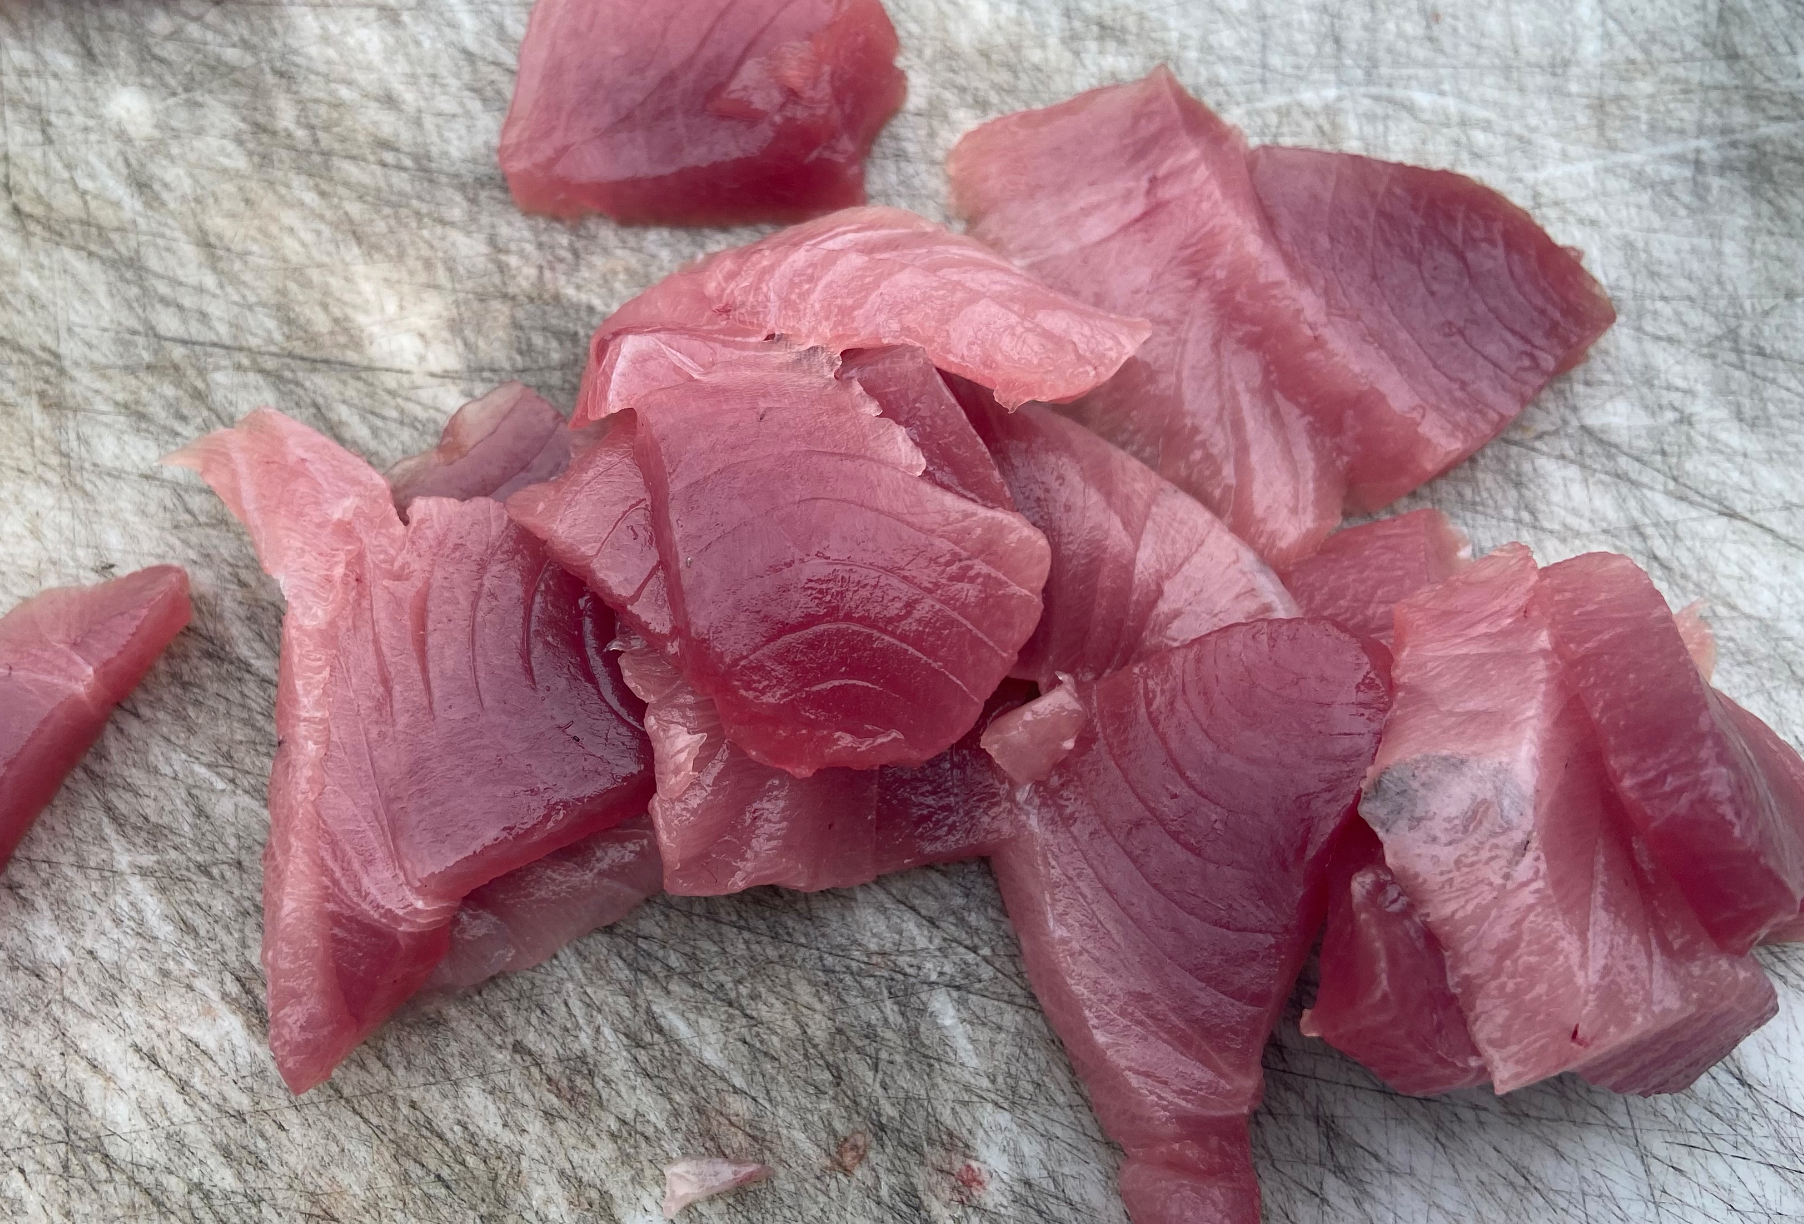 False albacore sashimi